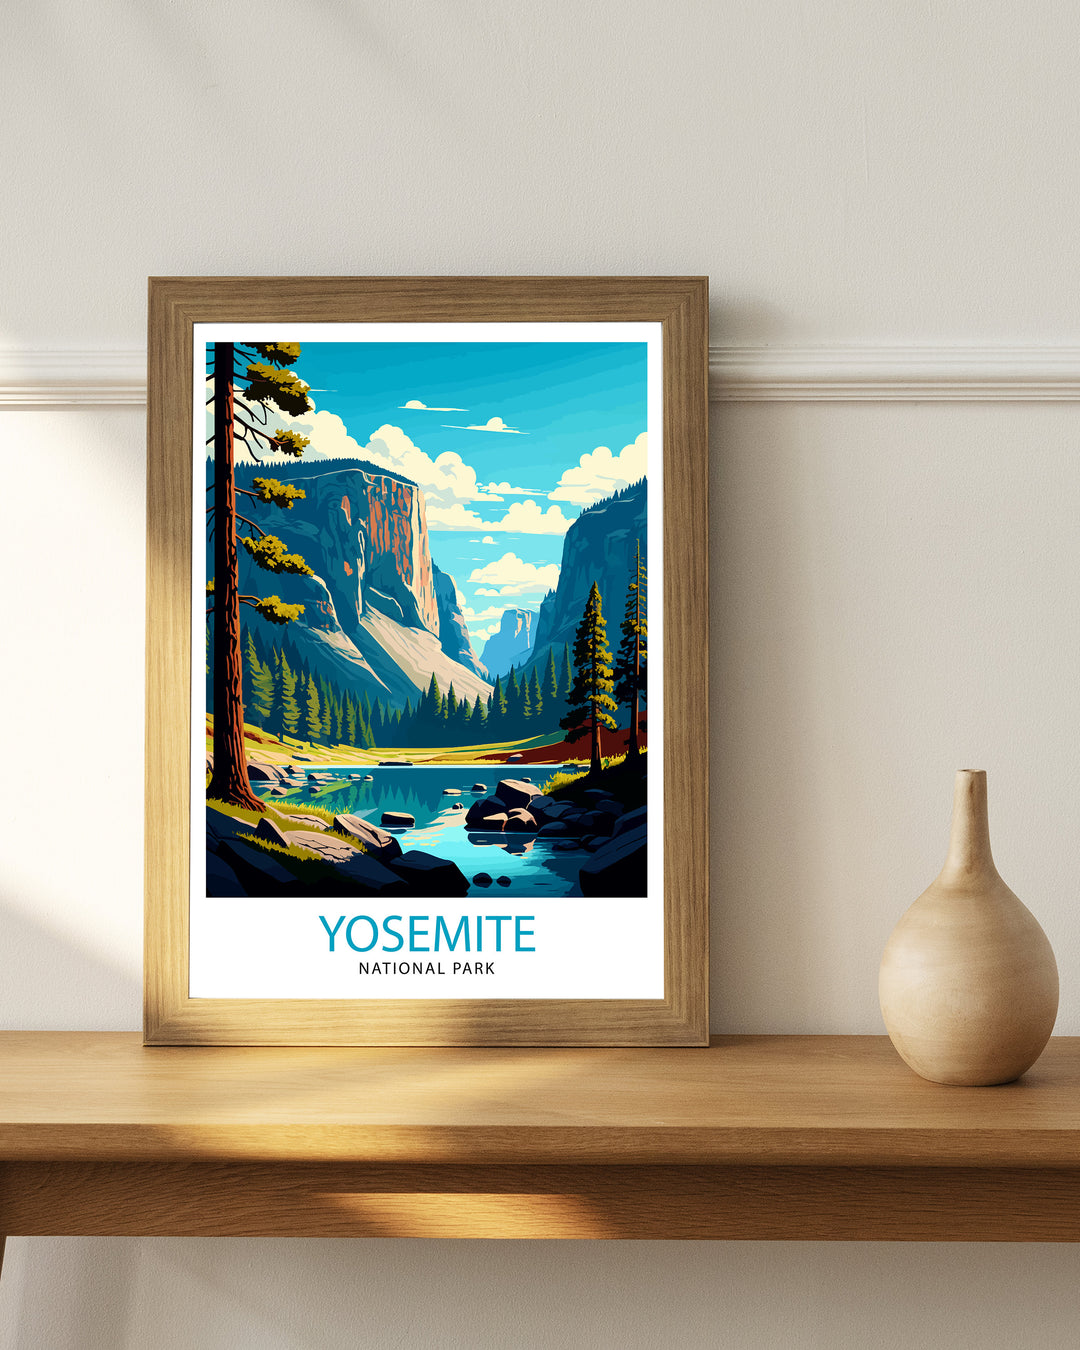 Yosemite National Park Travel Poster Yosemite Wall Art Yosemite Home Living Decor Yosemite Illustration Travel Poster Gift for Yosemite Fans